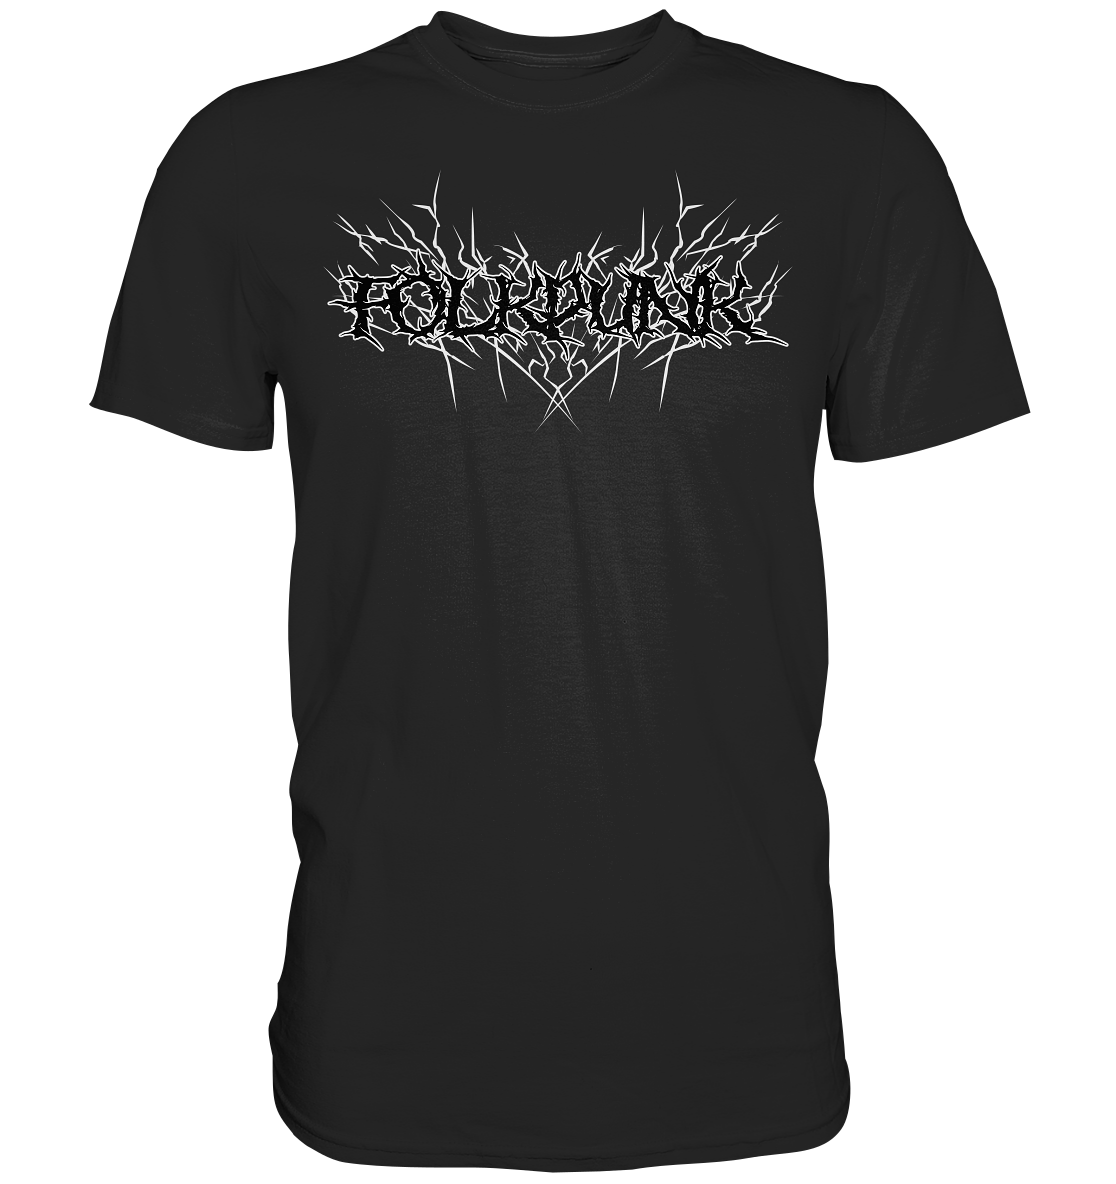 Folkpunk "Metal Band" - Premium Shirt